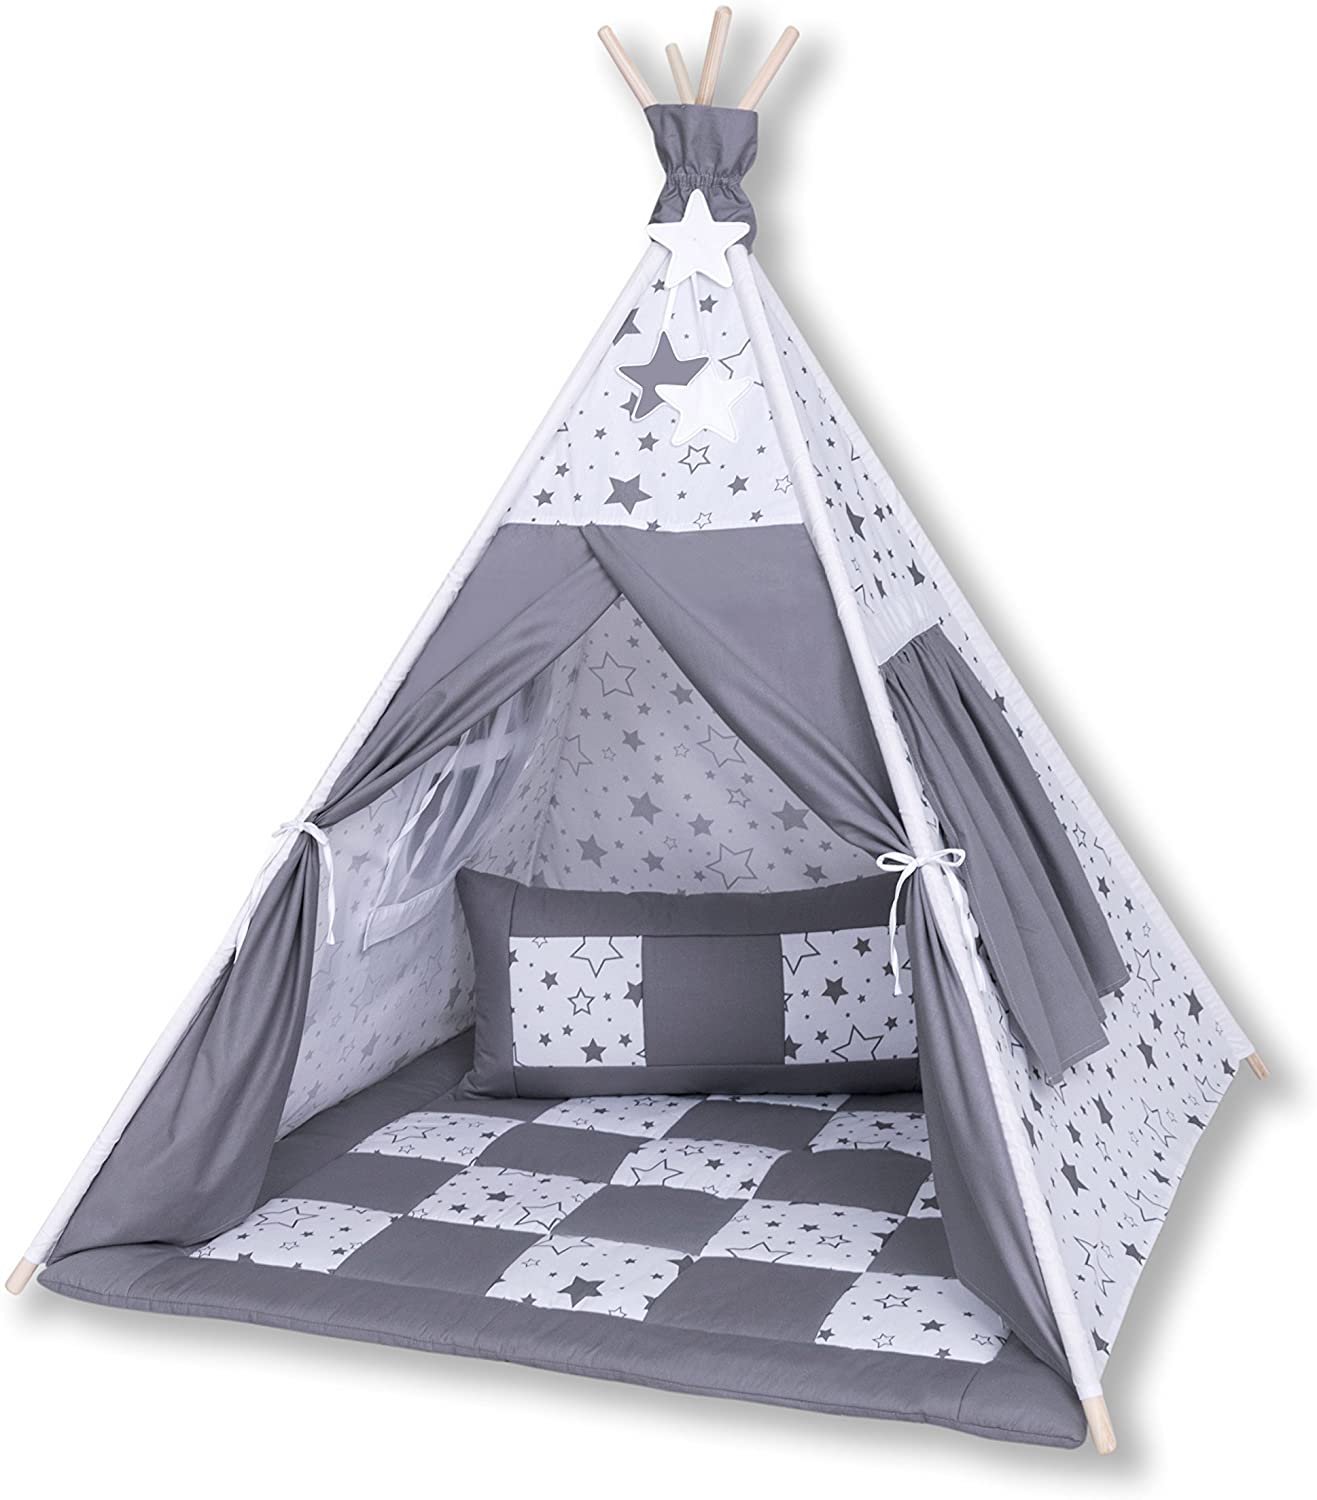 Amilian® teepi play tent for children T27